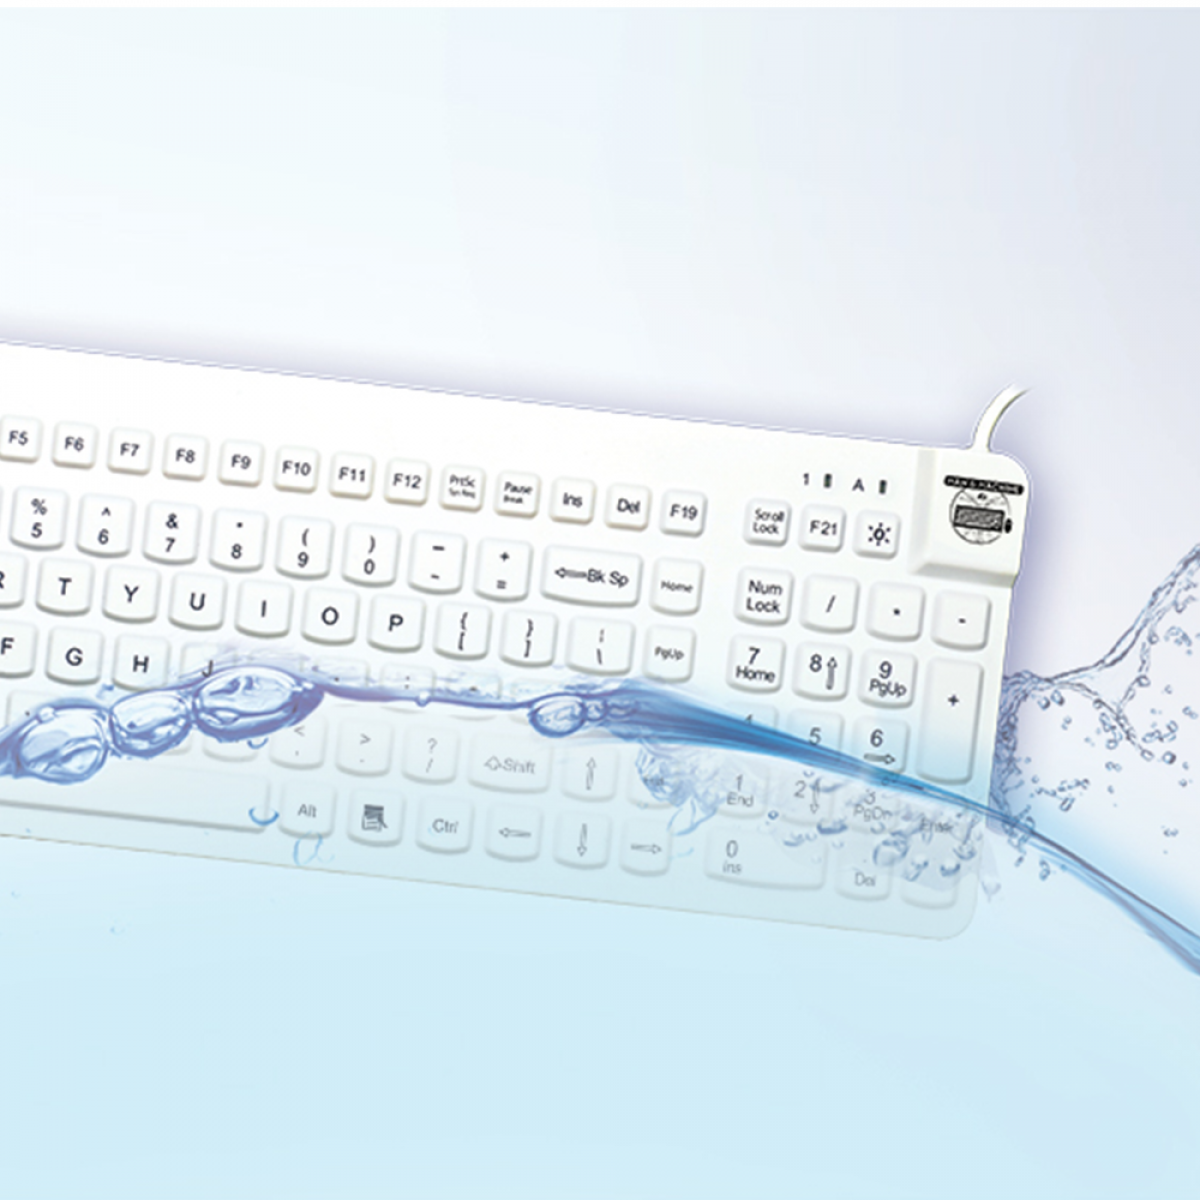 Man-&-Machine-Really-Cool-Keyboard_immersible-keyboard.png